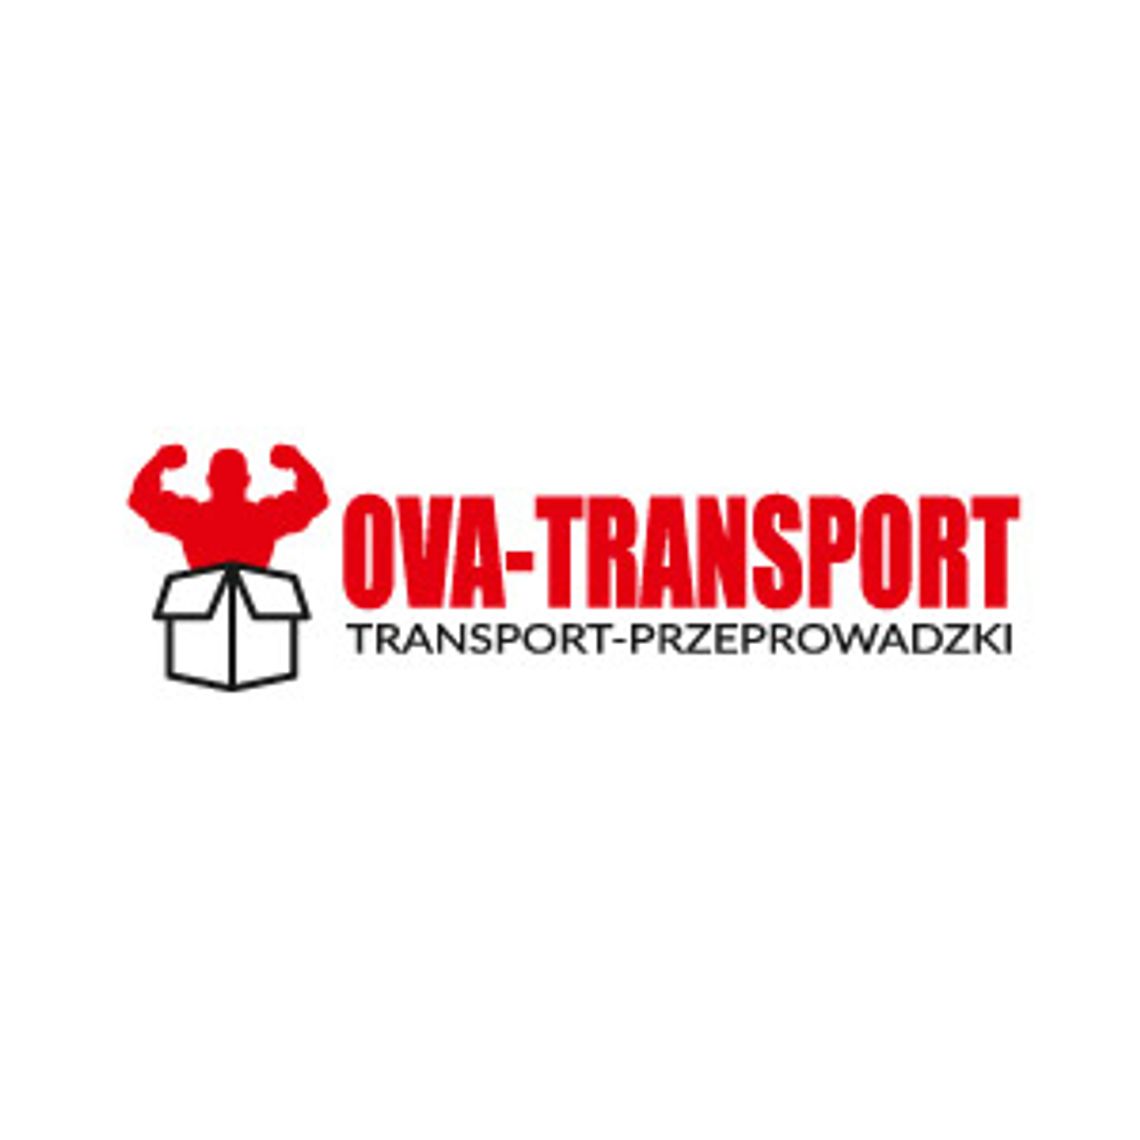 Przeprowadzki i transport | OVA-TRANSPORT